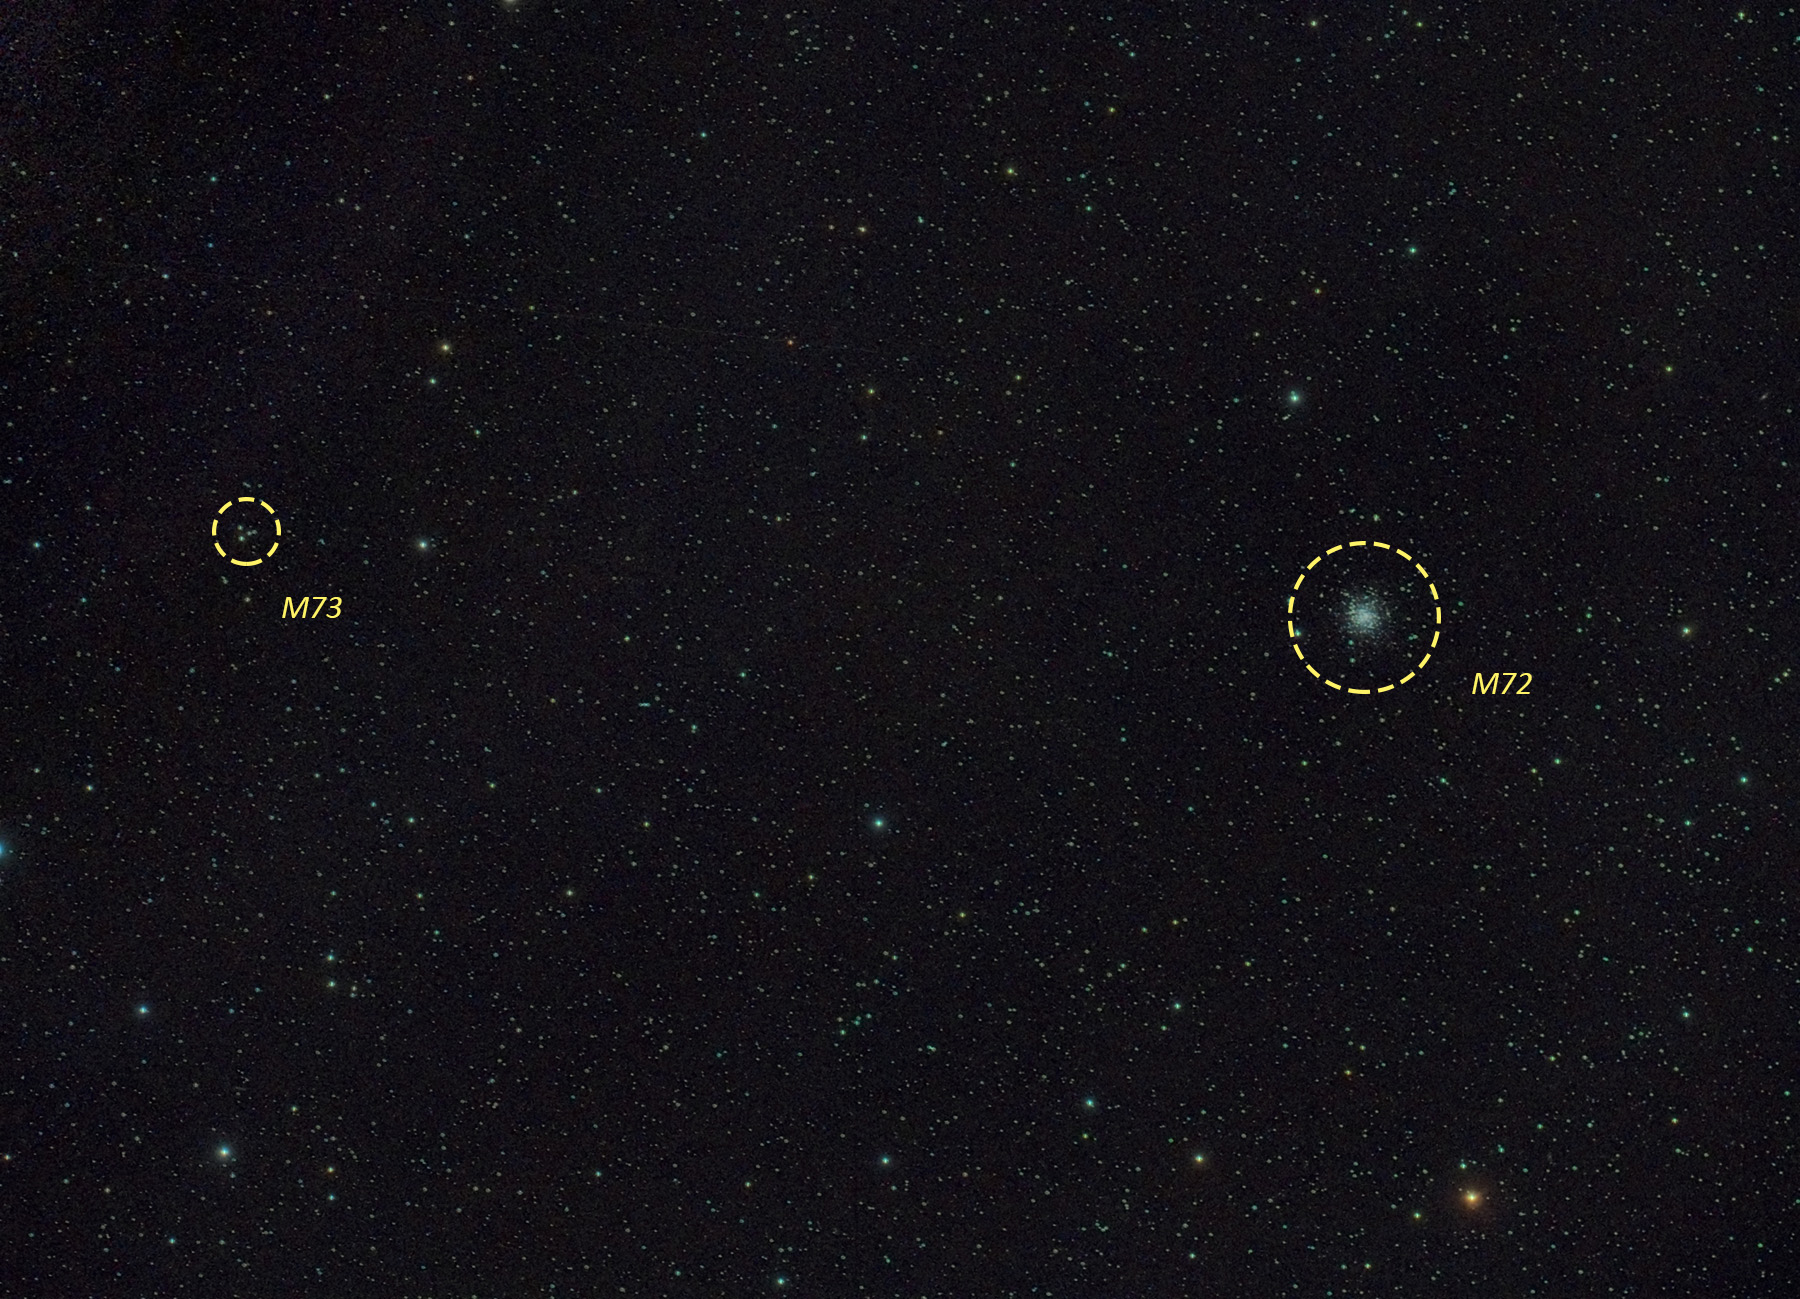 Cúmul M 72 i asterisme M 73 amb noms